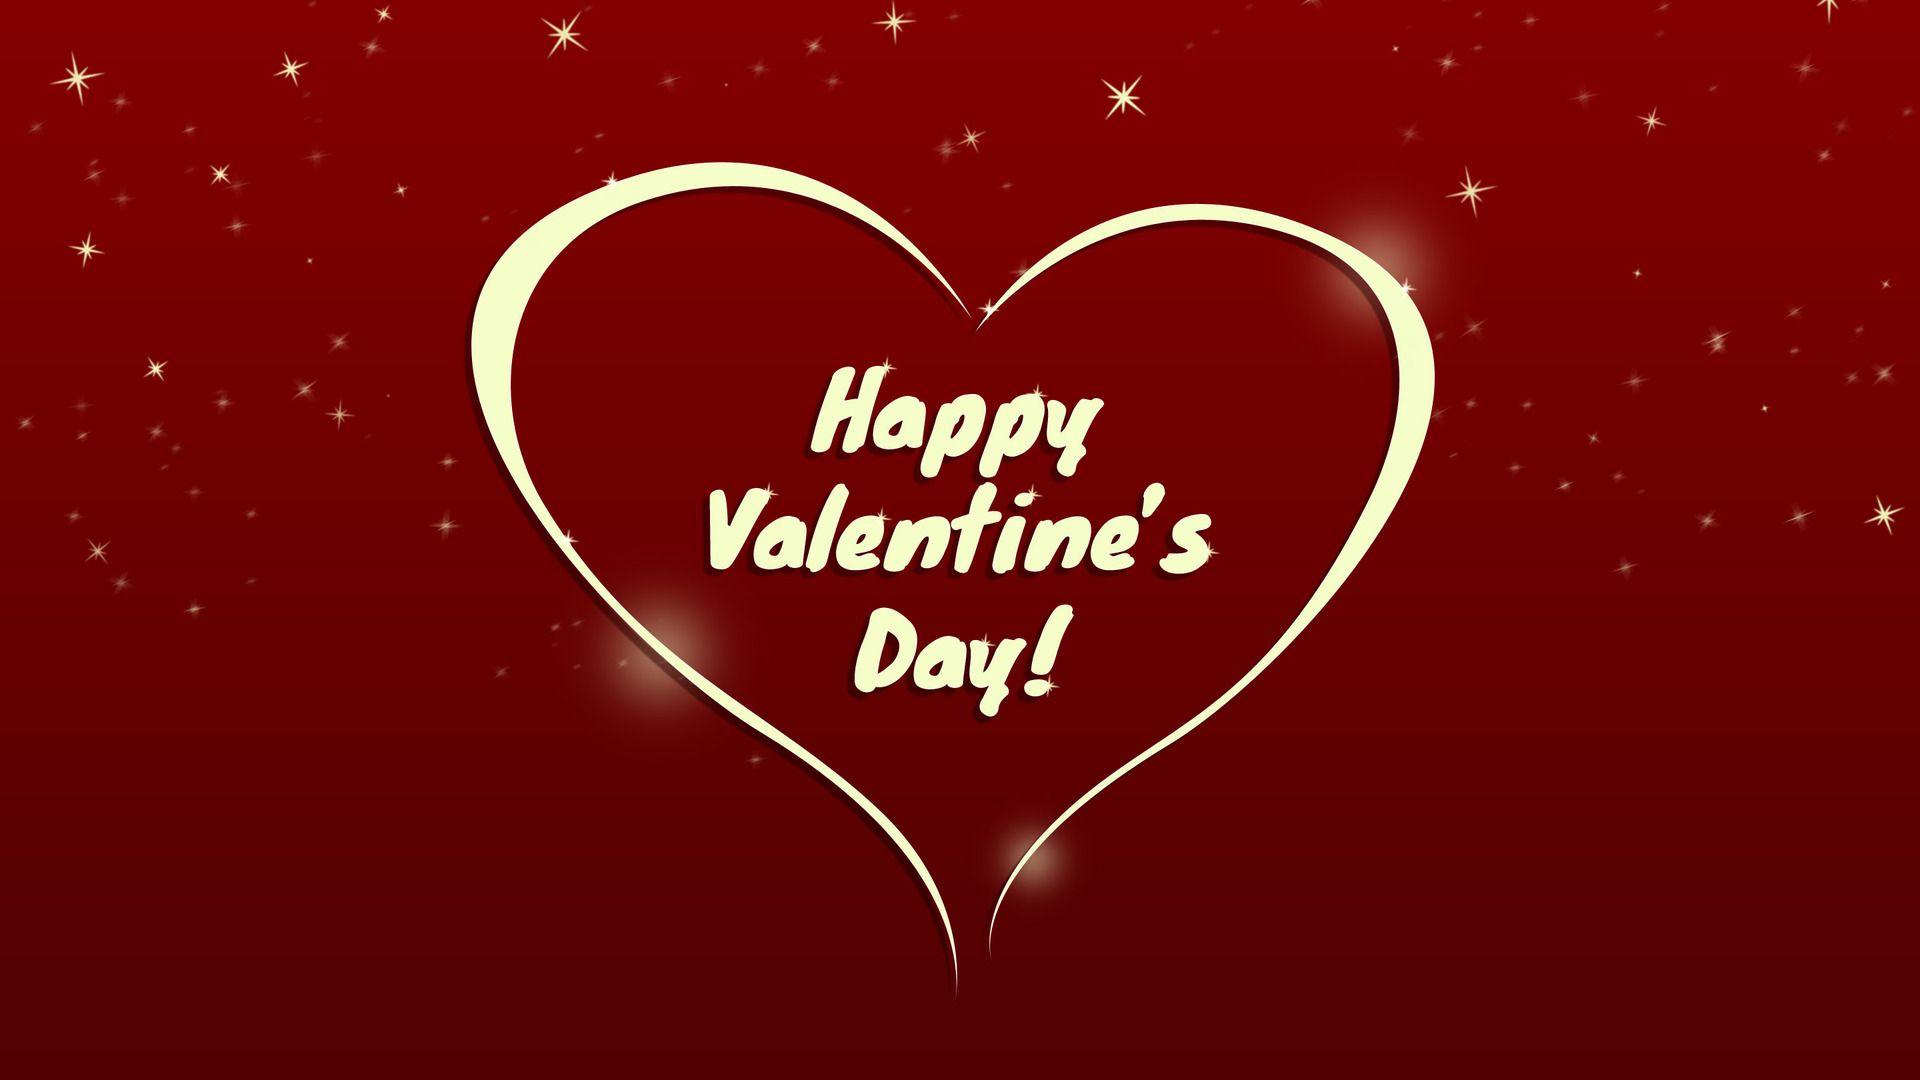 Best HD Valentine's Day Image for Mobile. PC. Desktop